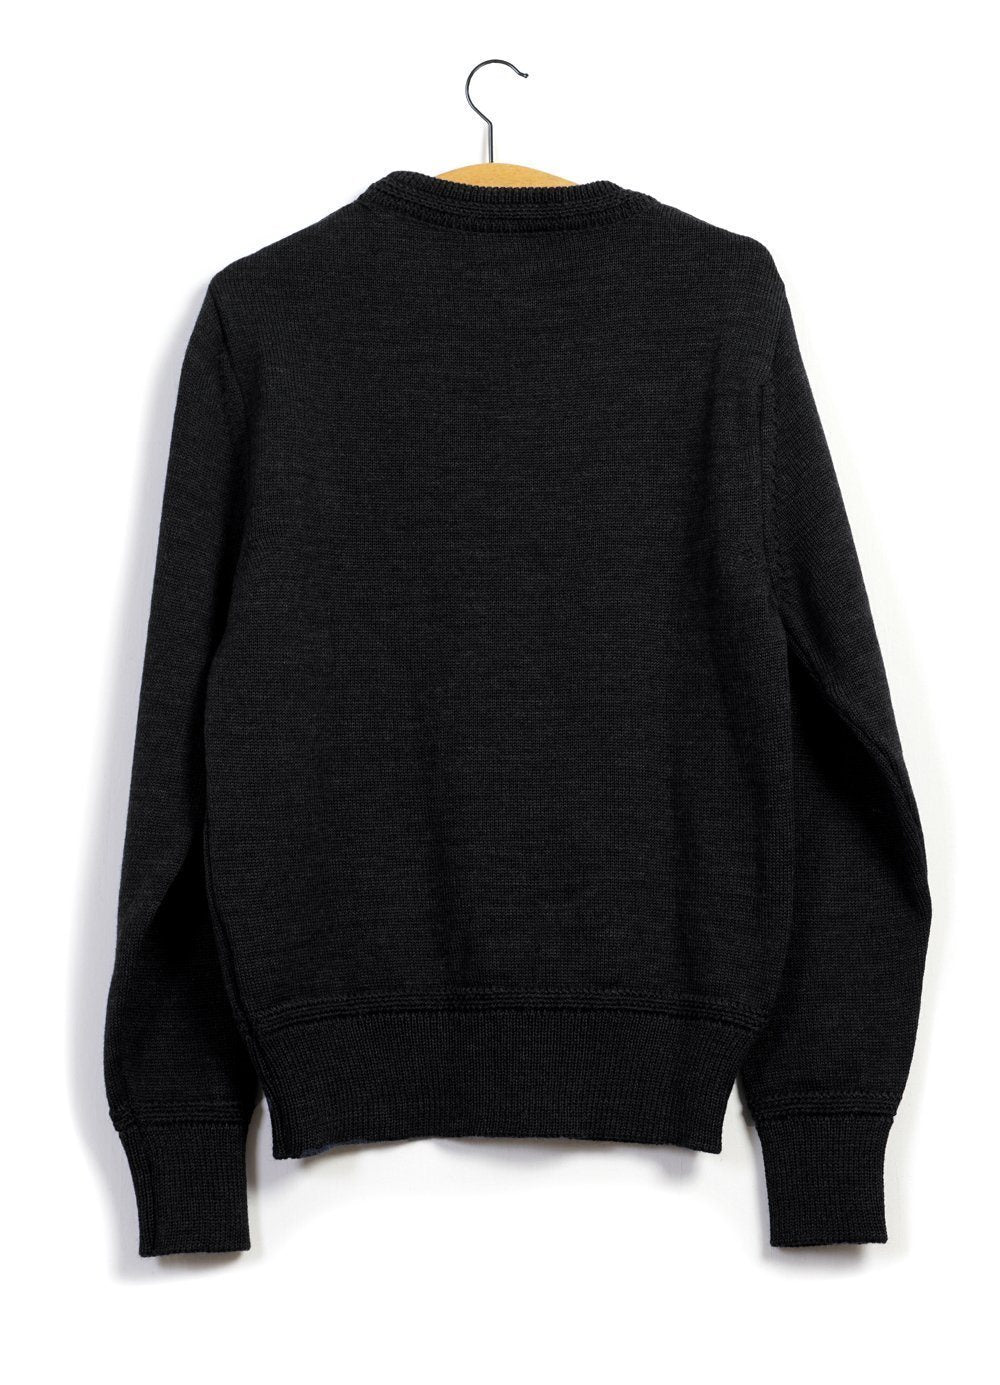 RAGNAR | Knitted Wool Sweater | Black | €270 -HANSEN Garments- HANSEN Garments